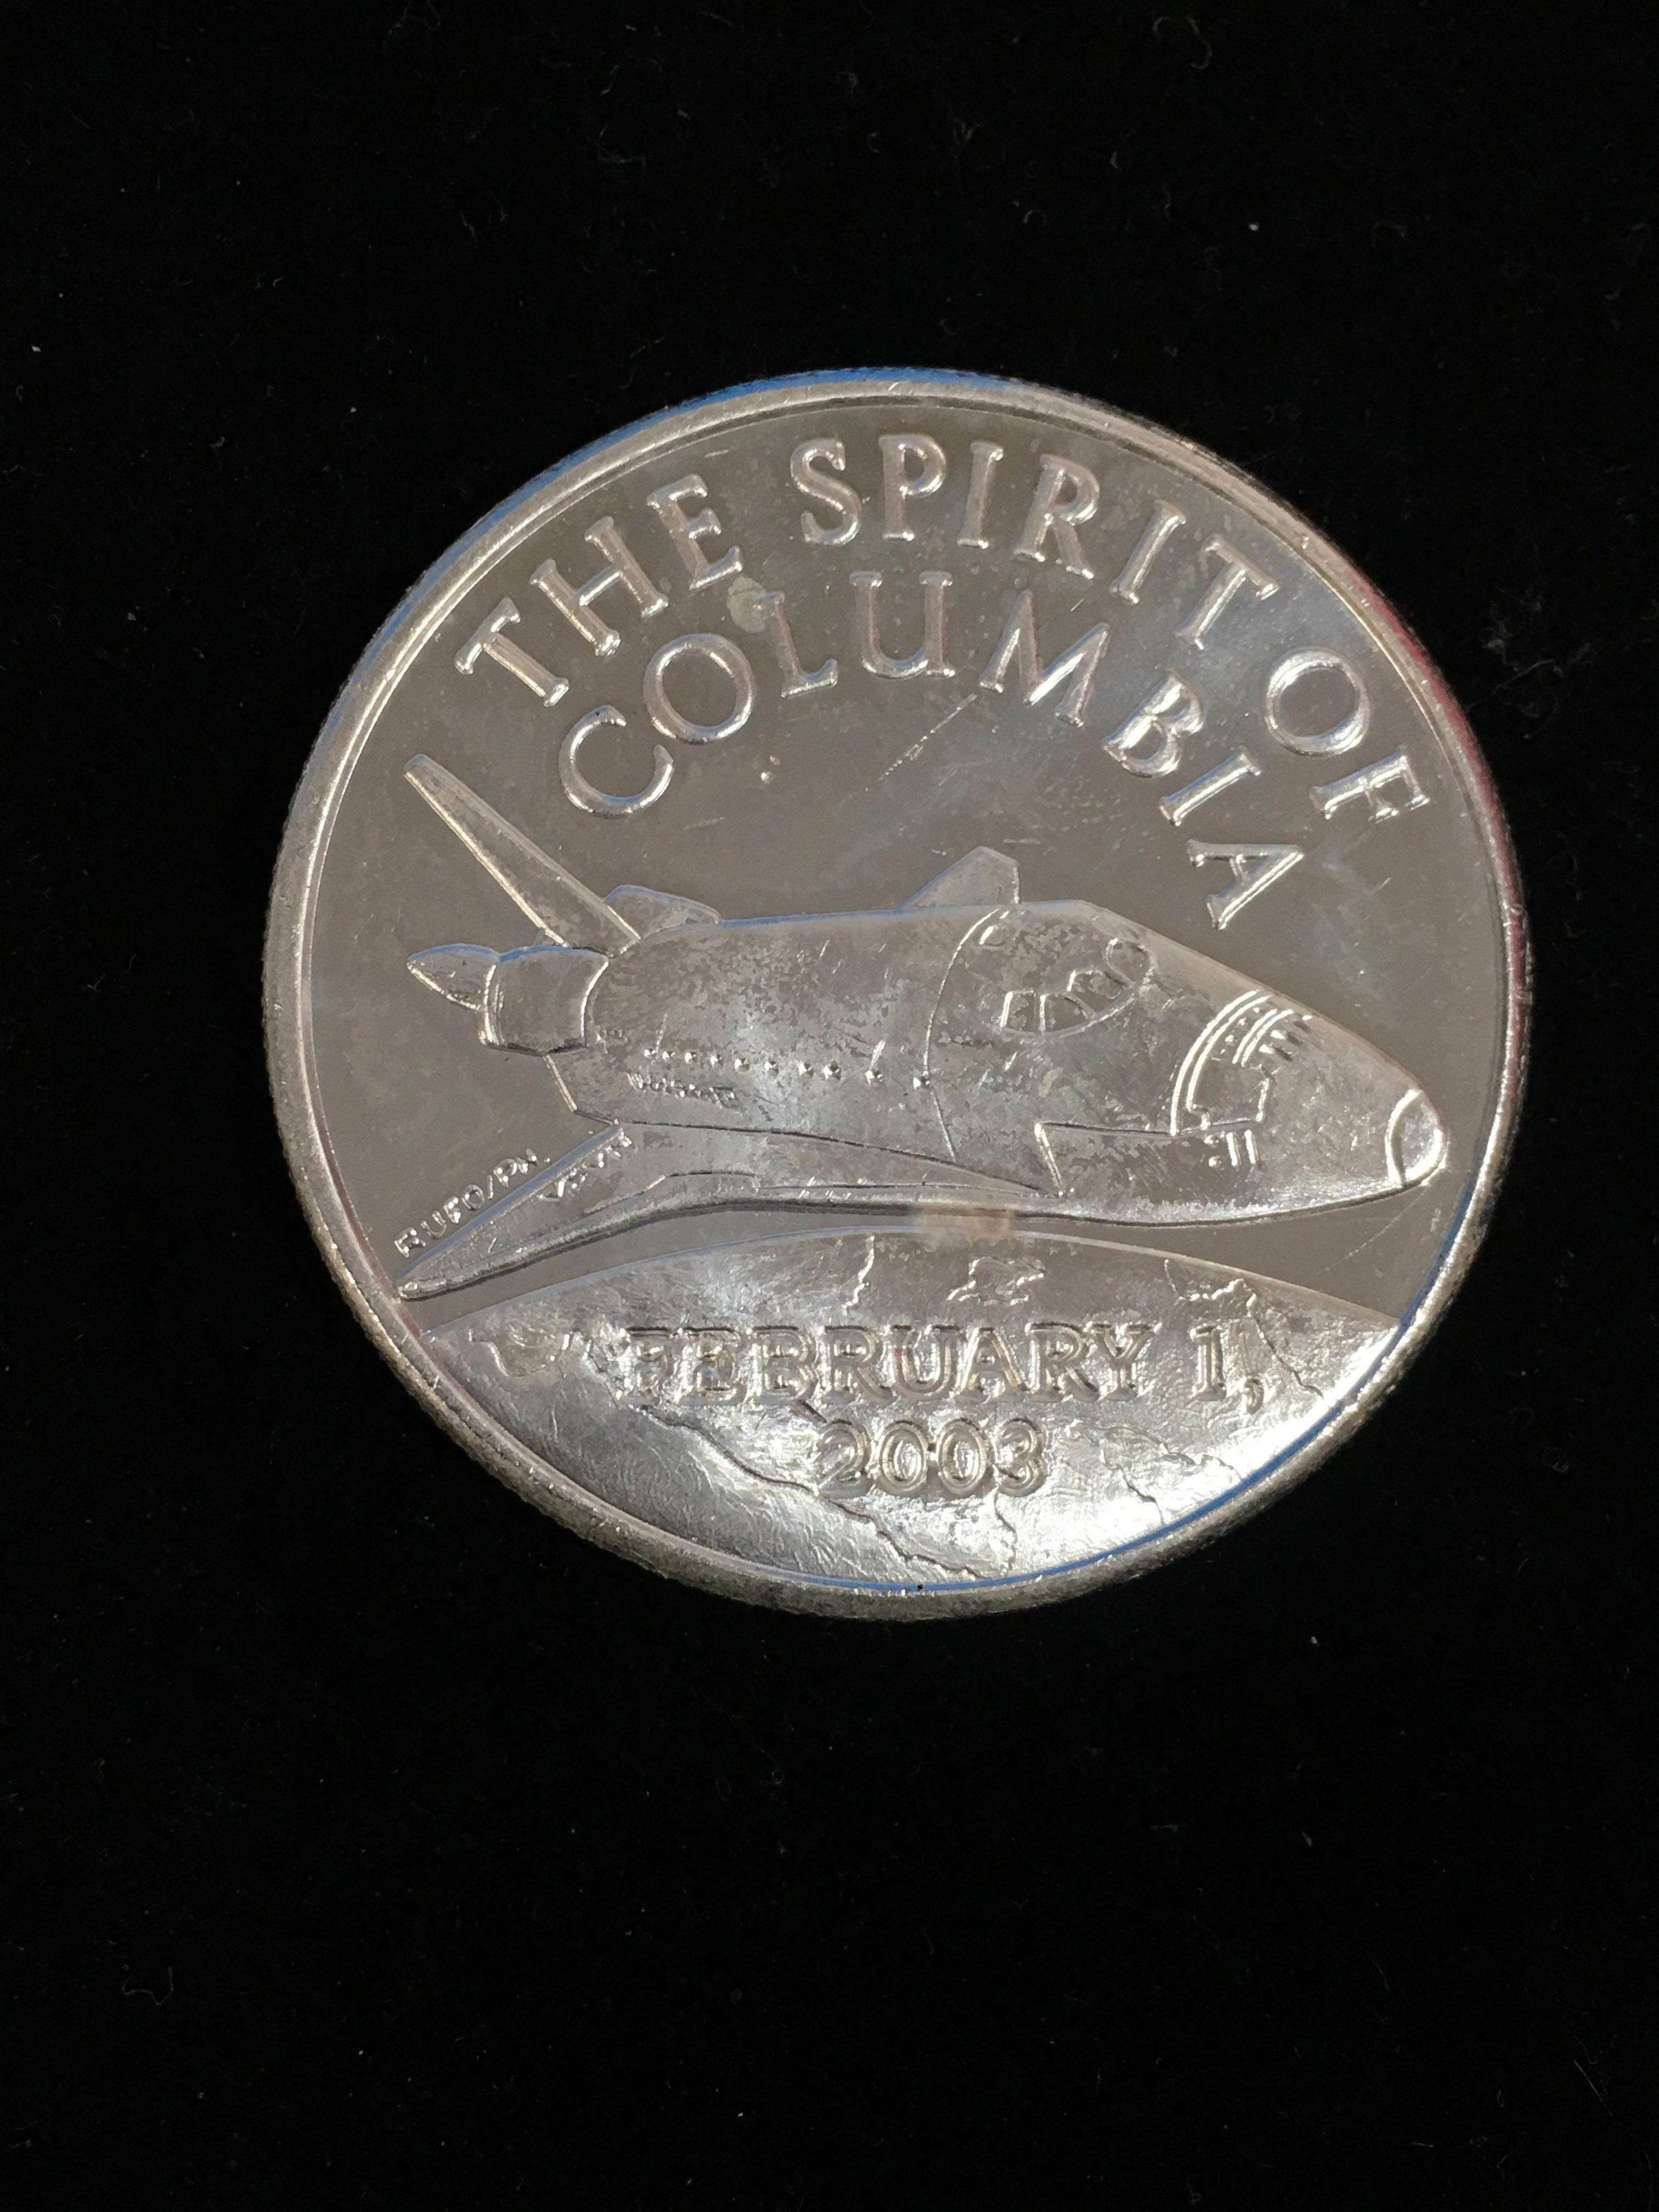 1 Troy Ounce .999 Fine Silver "The Spirit of Columbia" Feb. 1, 2003 Bullion Round